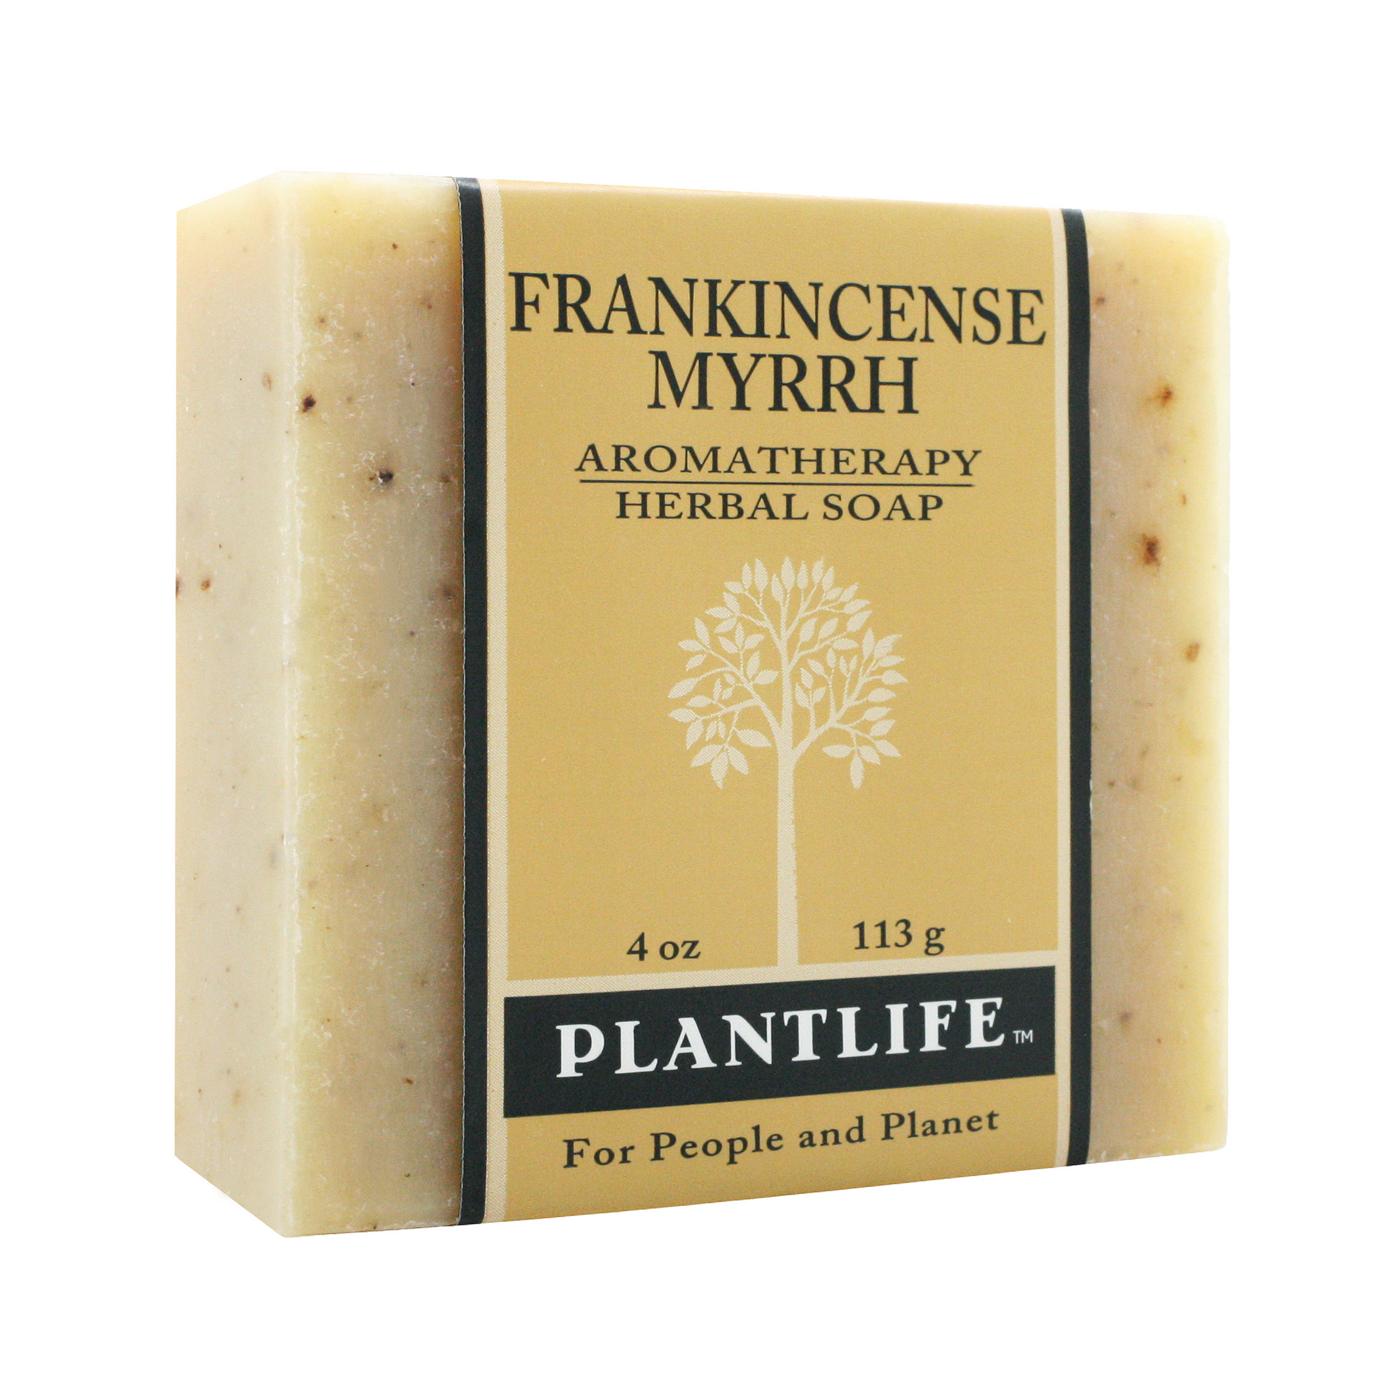 Plantlife Aromatherapy Herbal Soap Frankincense Myrrh; image 1 of 2